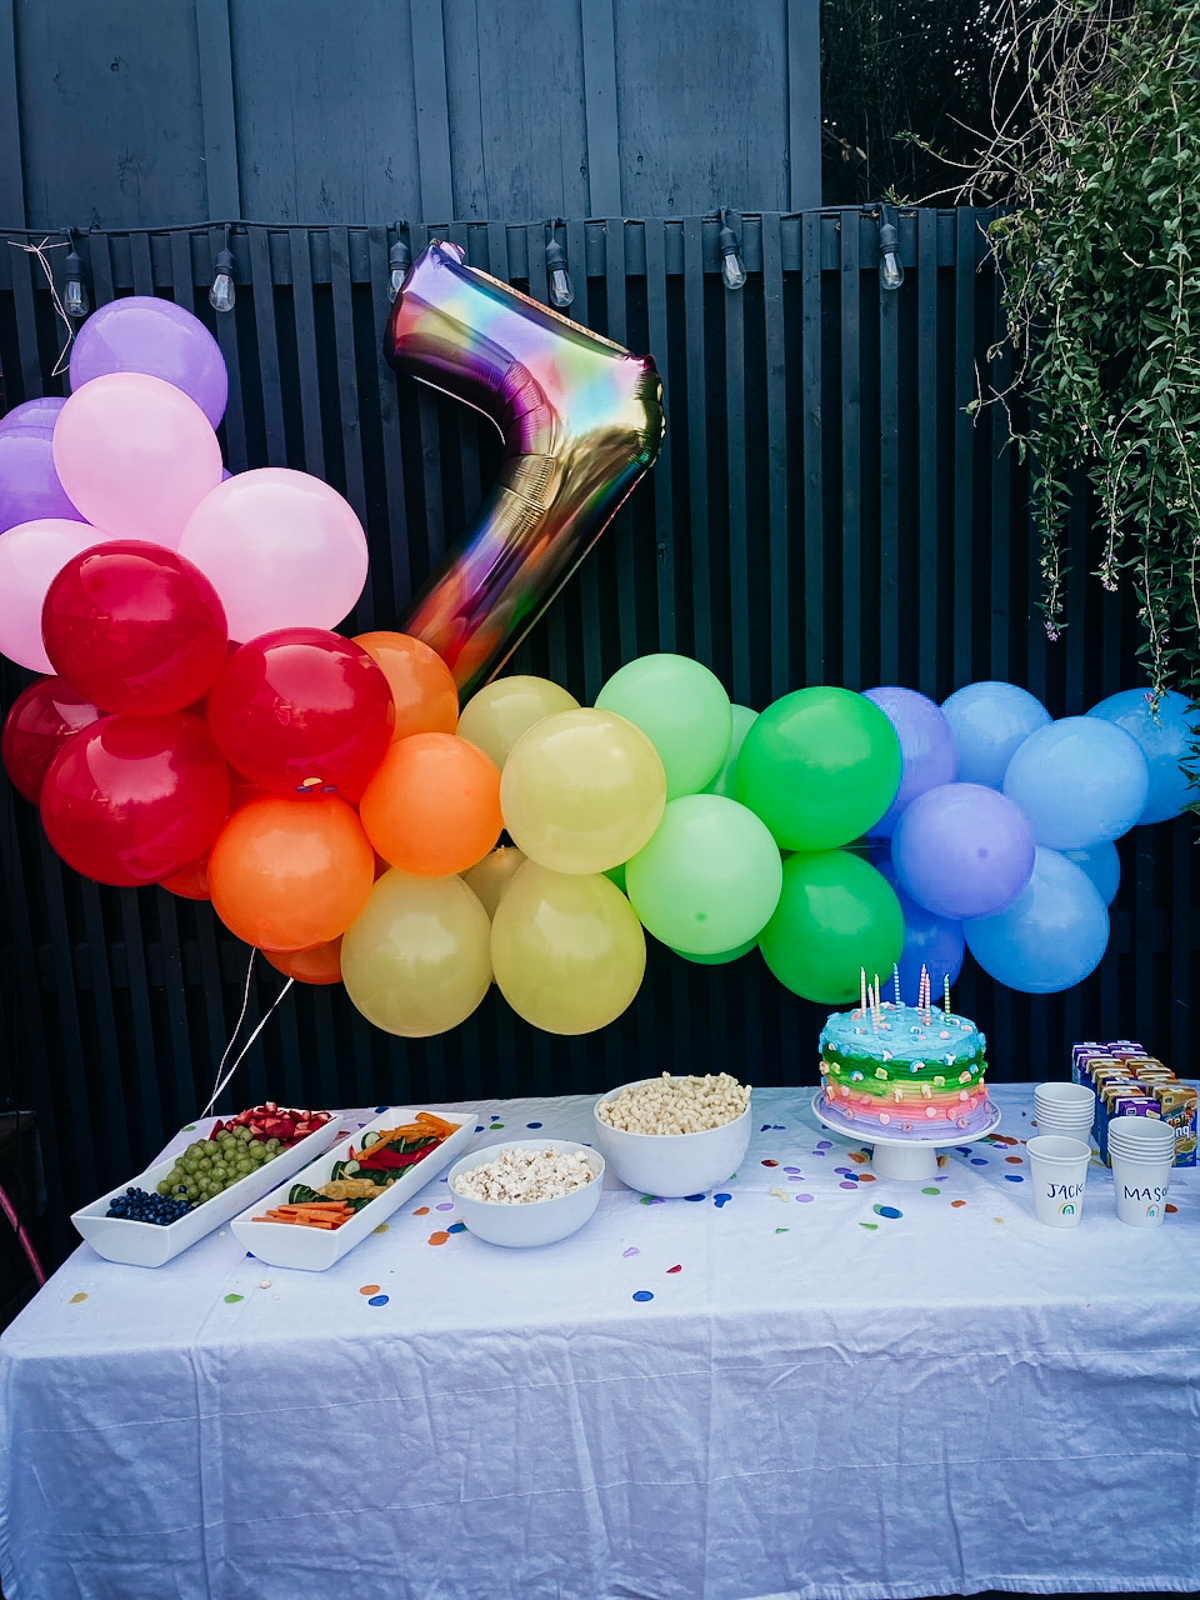 Rainbow birthday party table with rainbow balloon arch and lucky charm cake